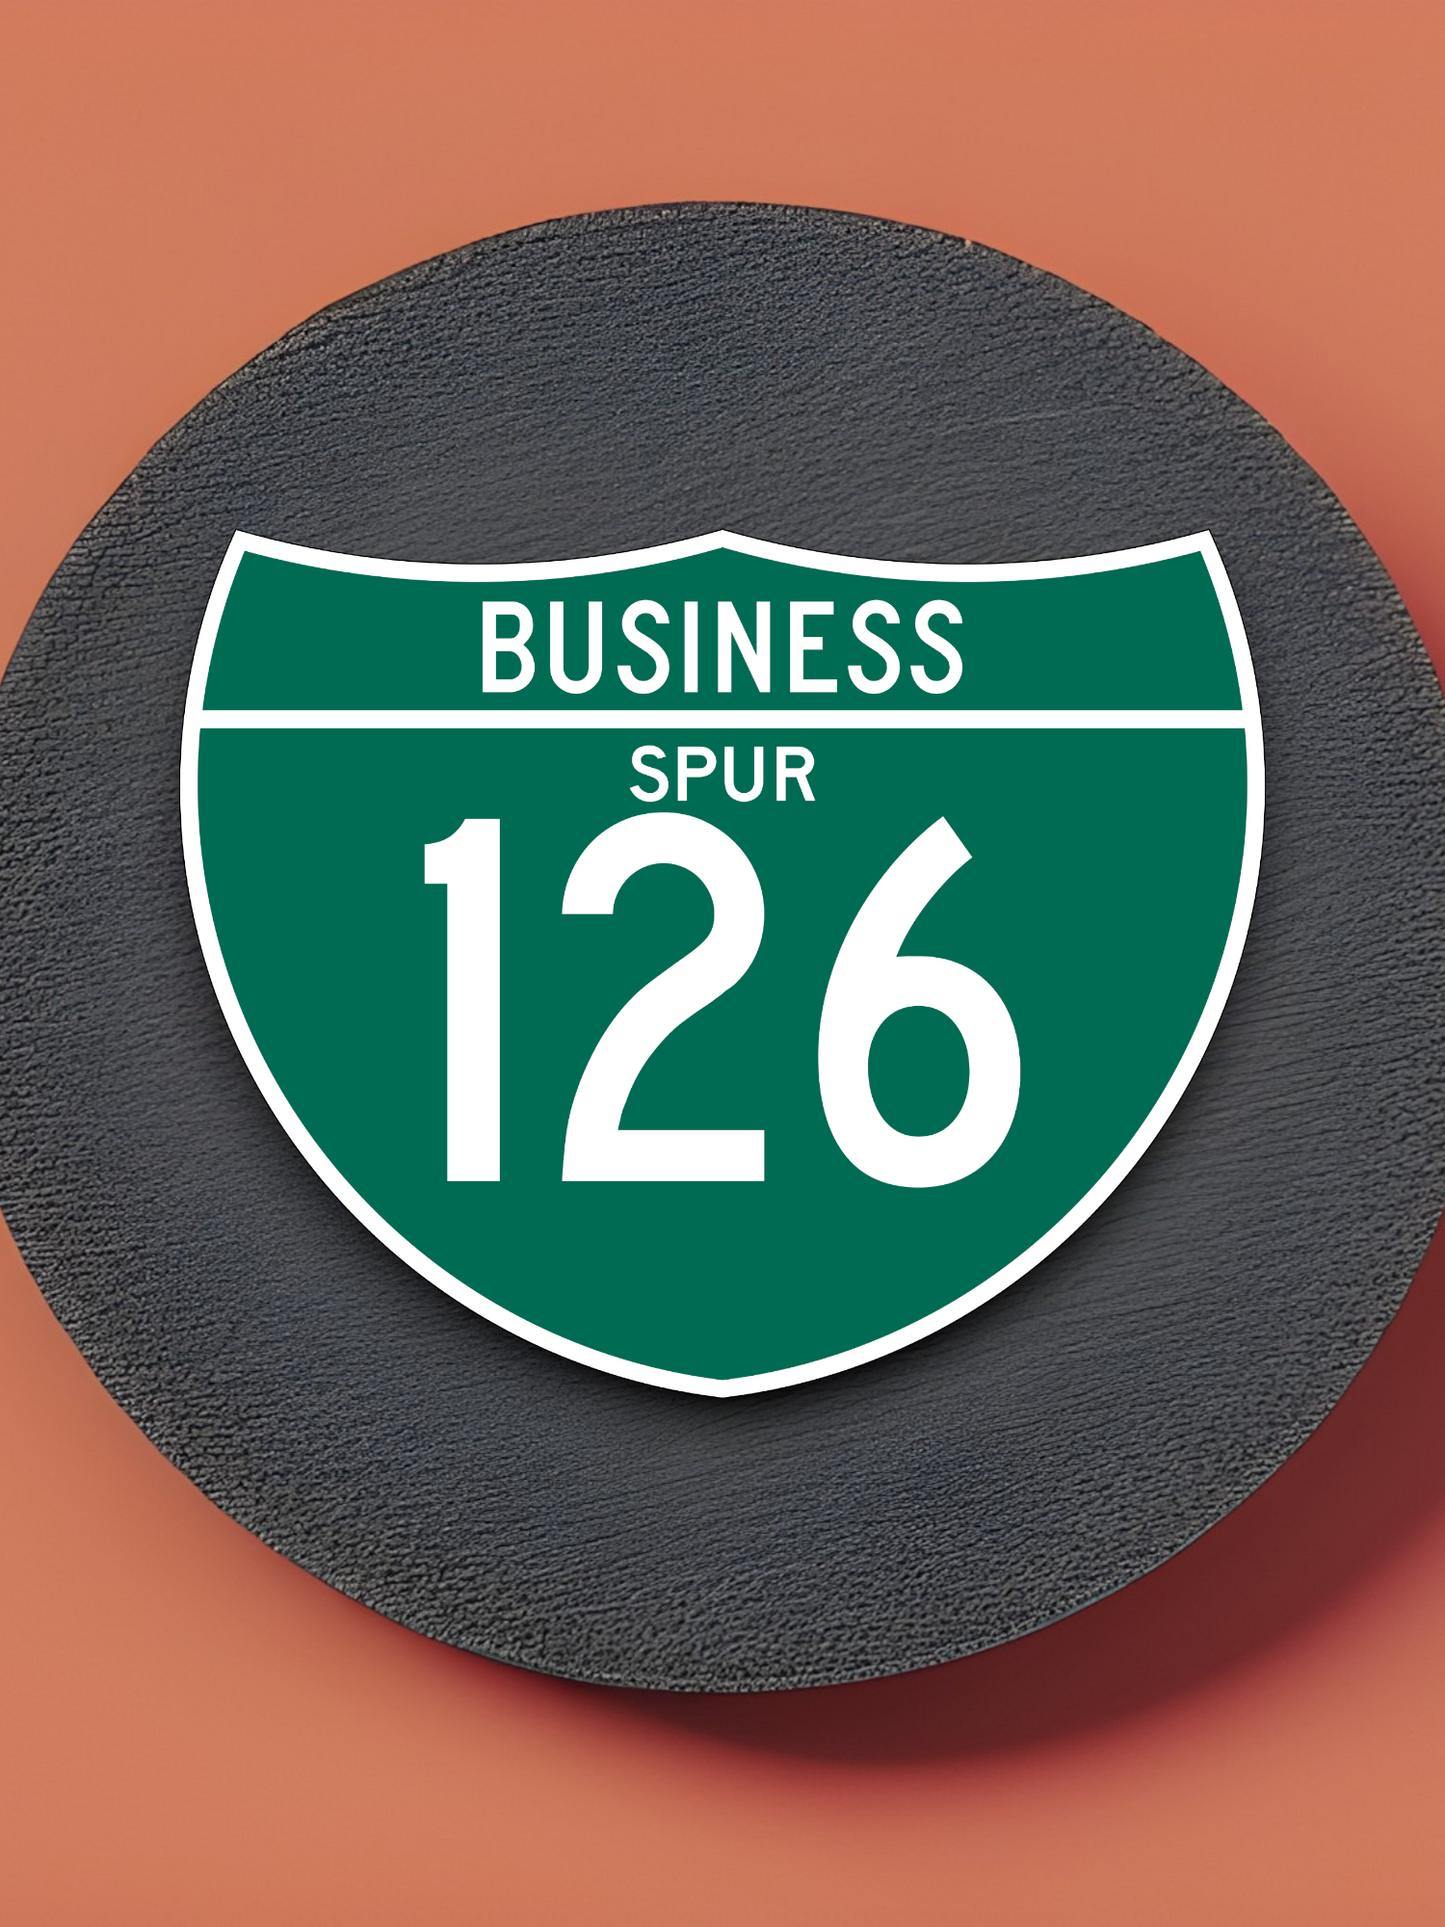 Business Spur 126 Road Sign Sticker